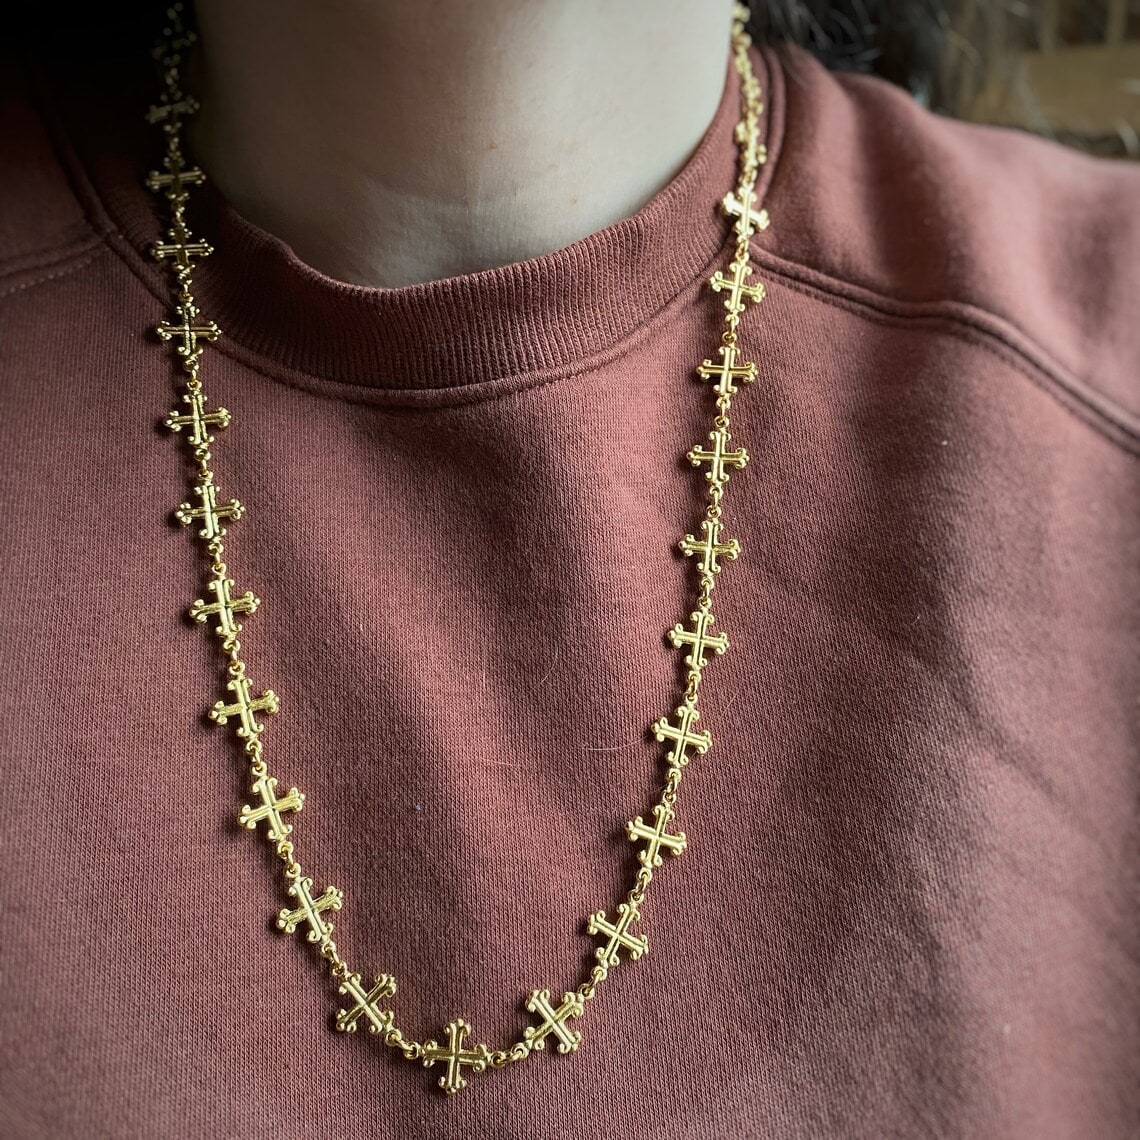 tudor style link chain on the neck